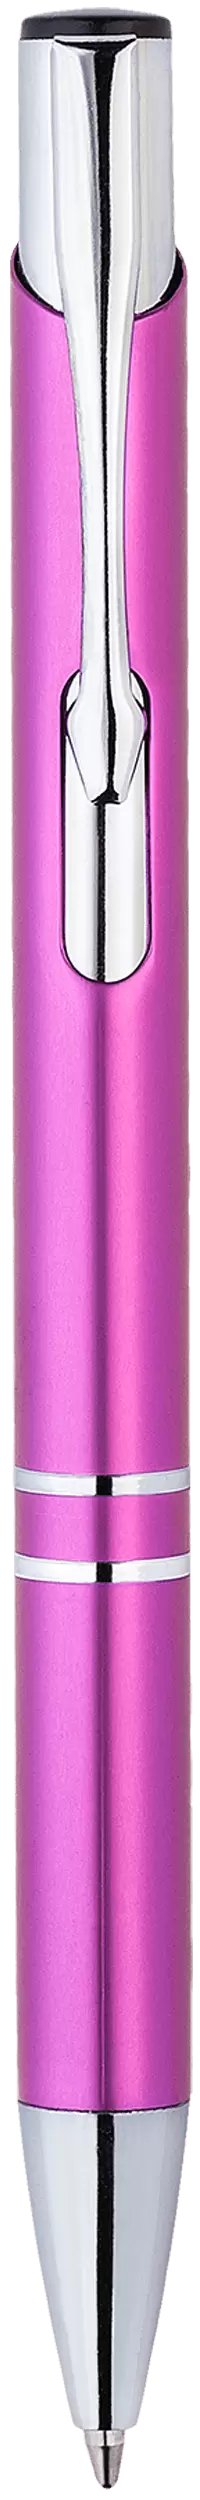 Ручка KOSKO Розовая 1001-10